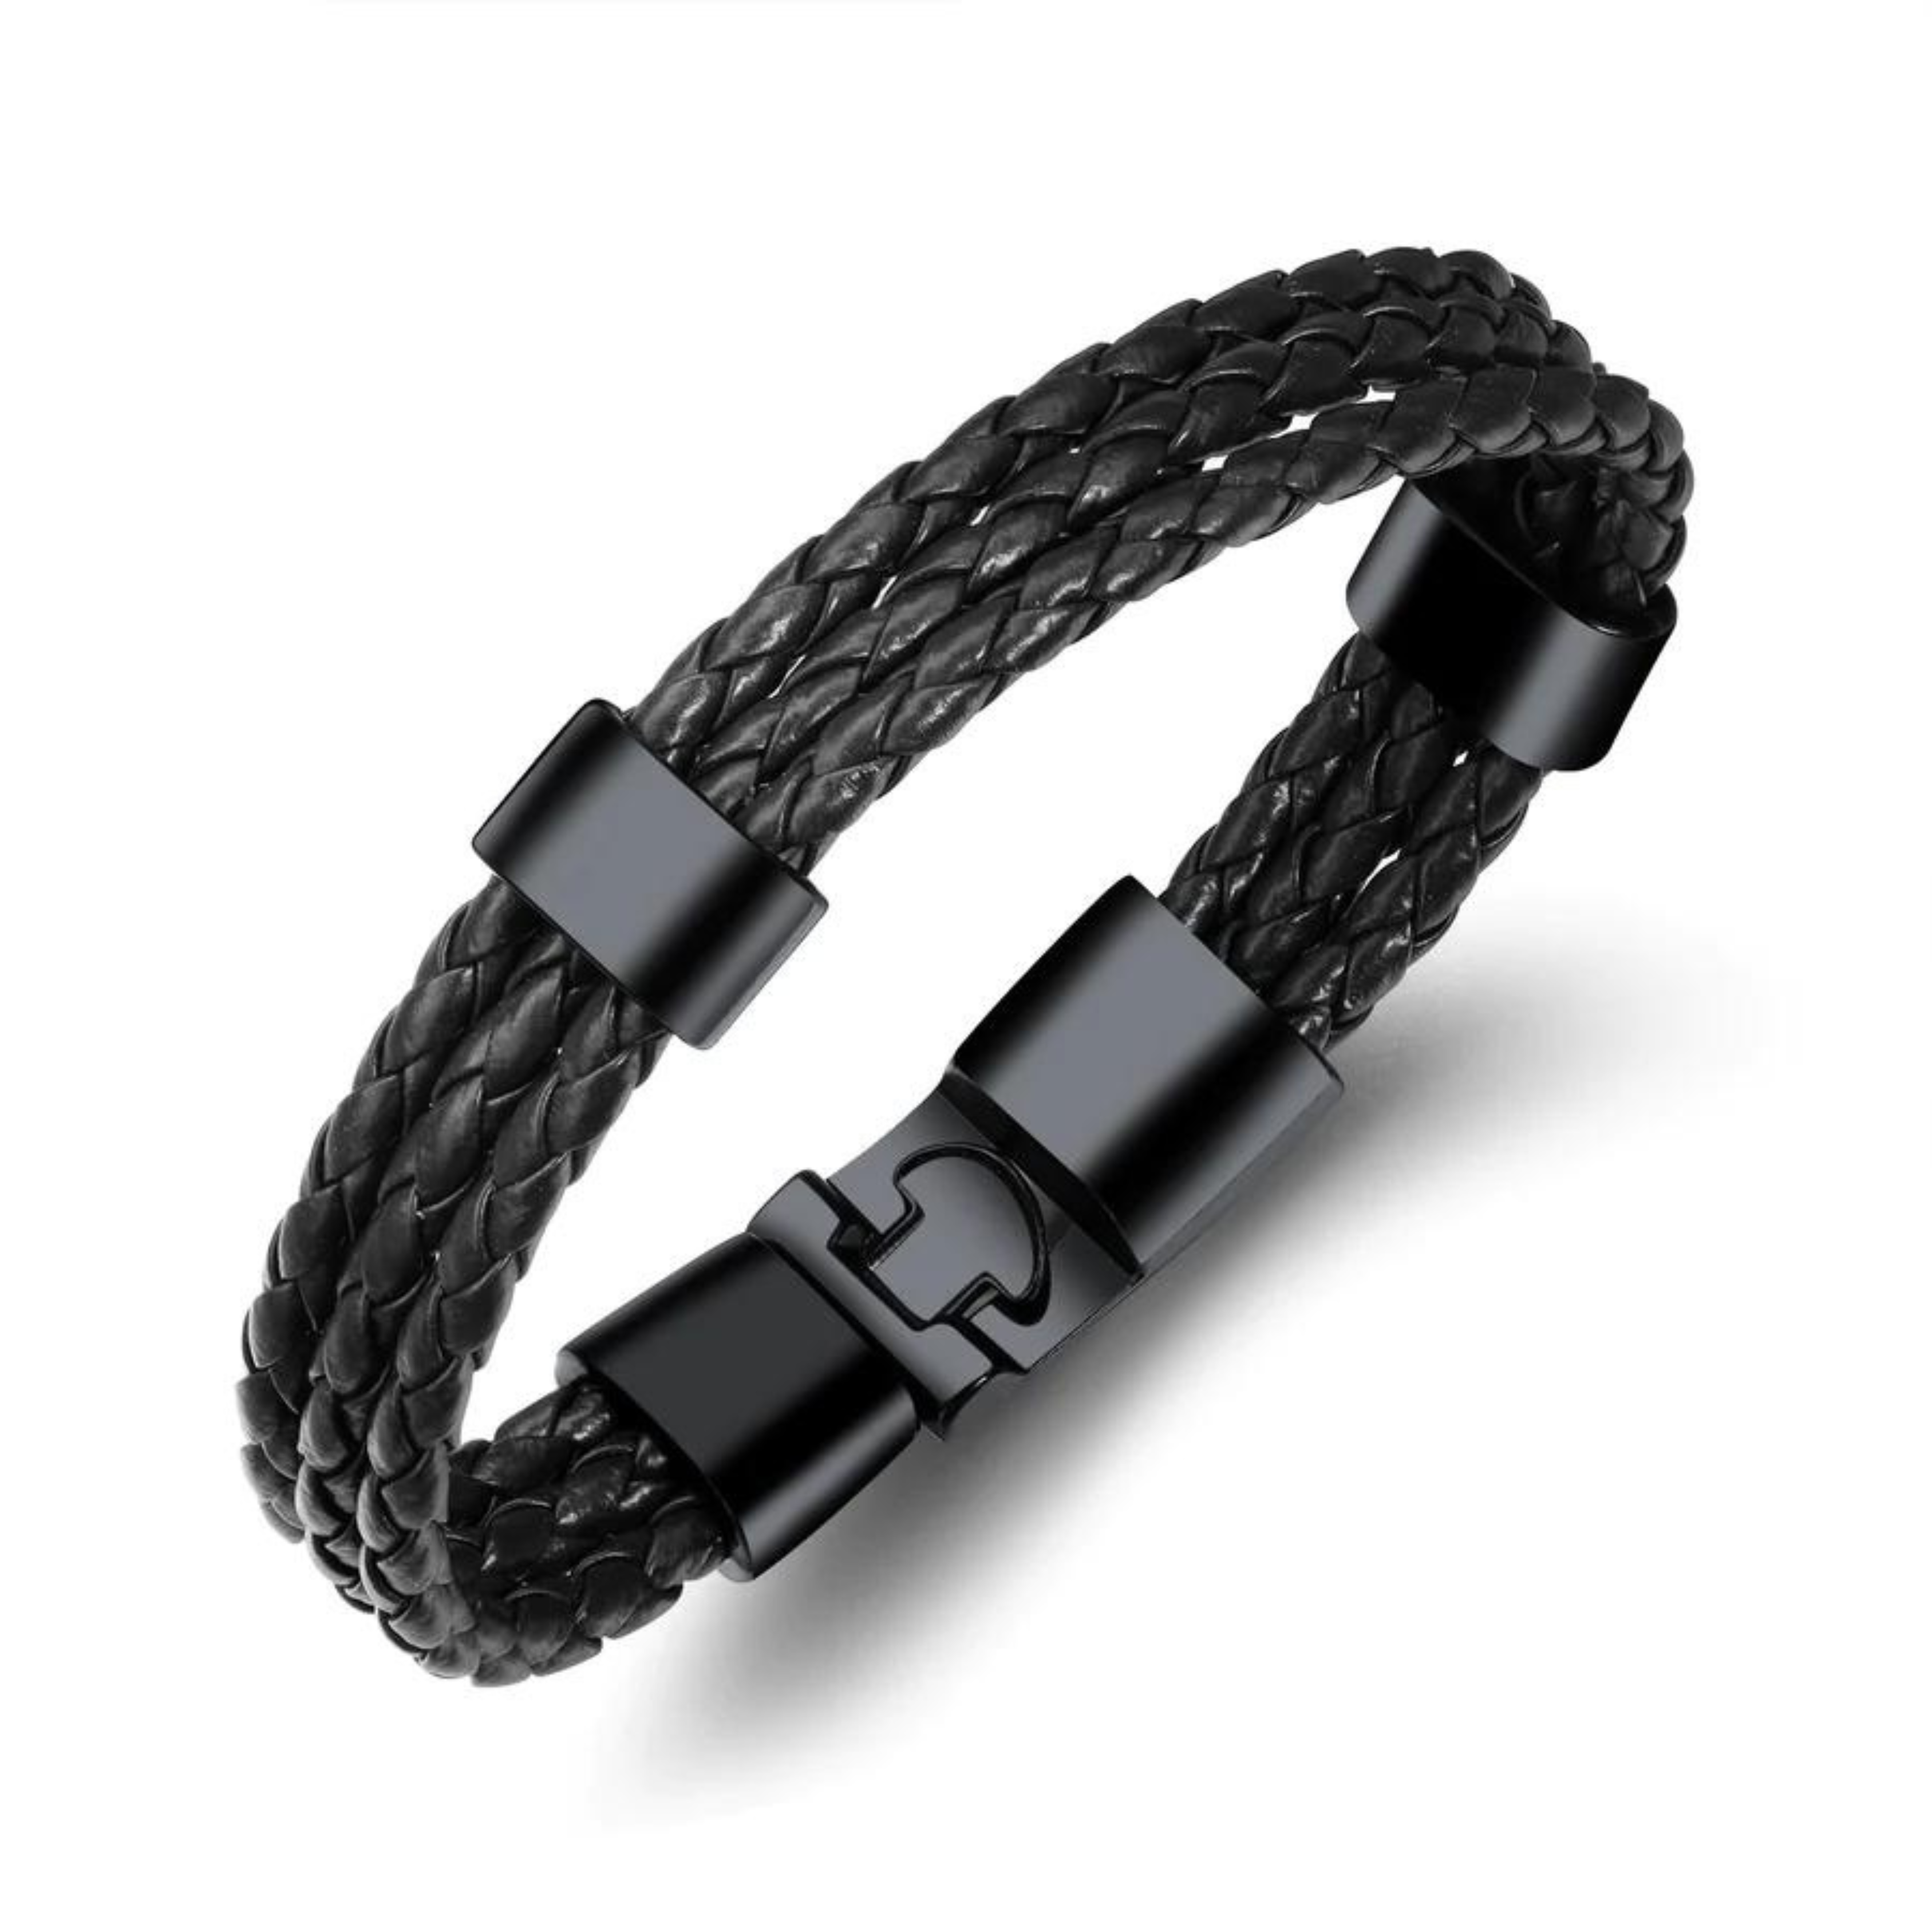 Menâ€™s Braided Triple Leather Bracelet â€“ Black Color, One Size